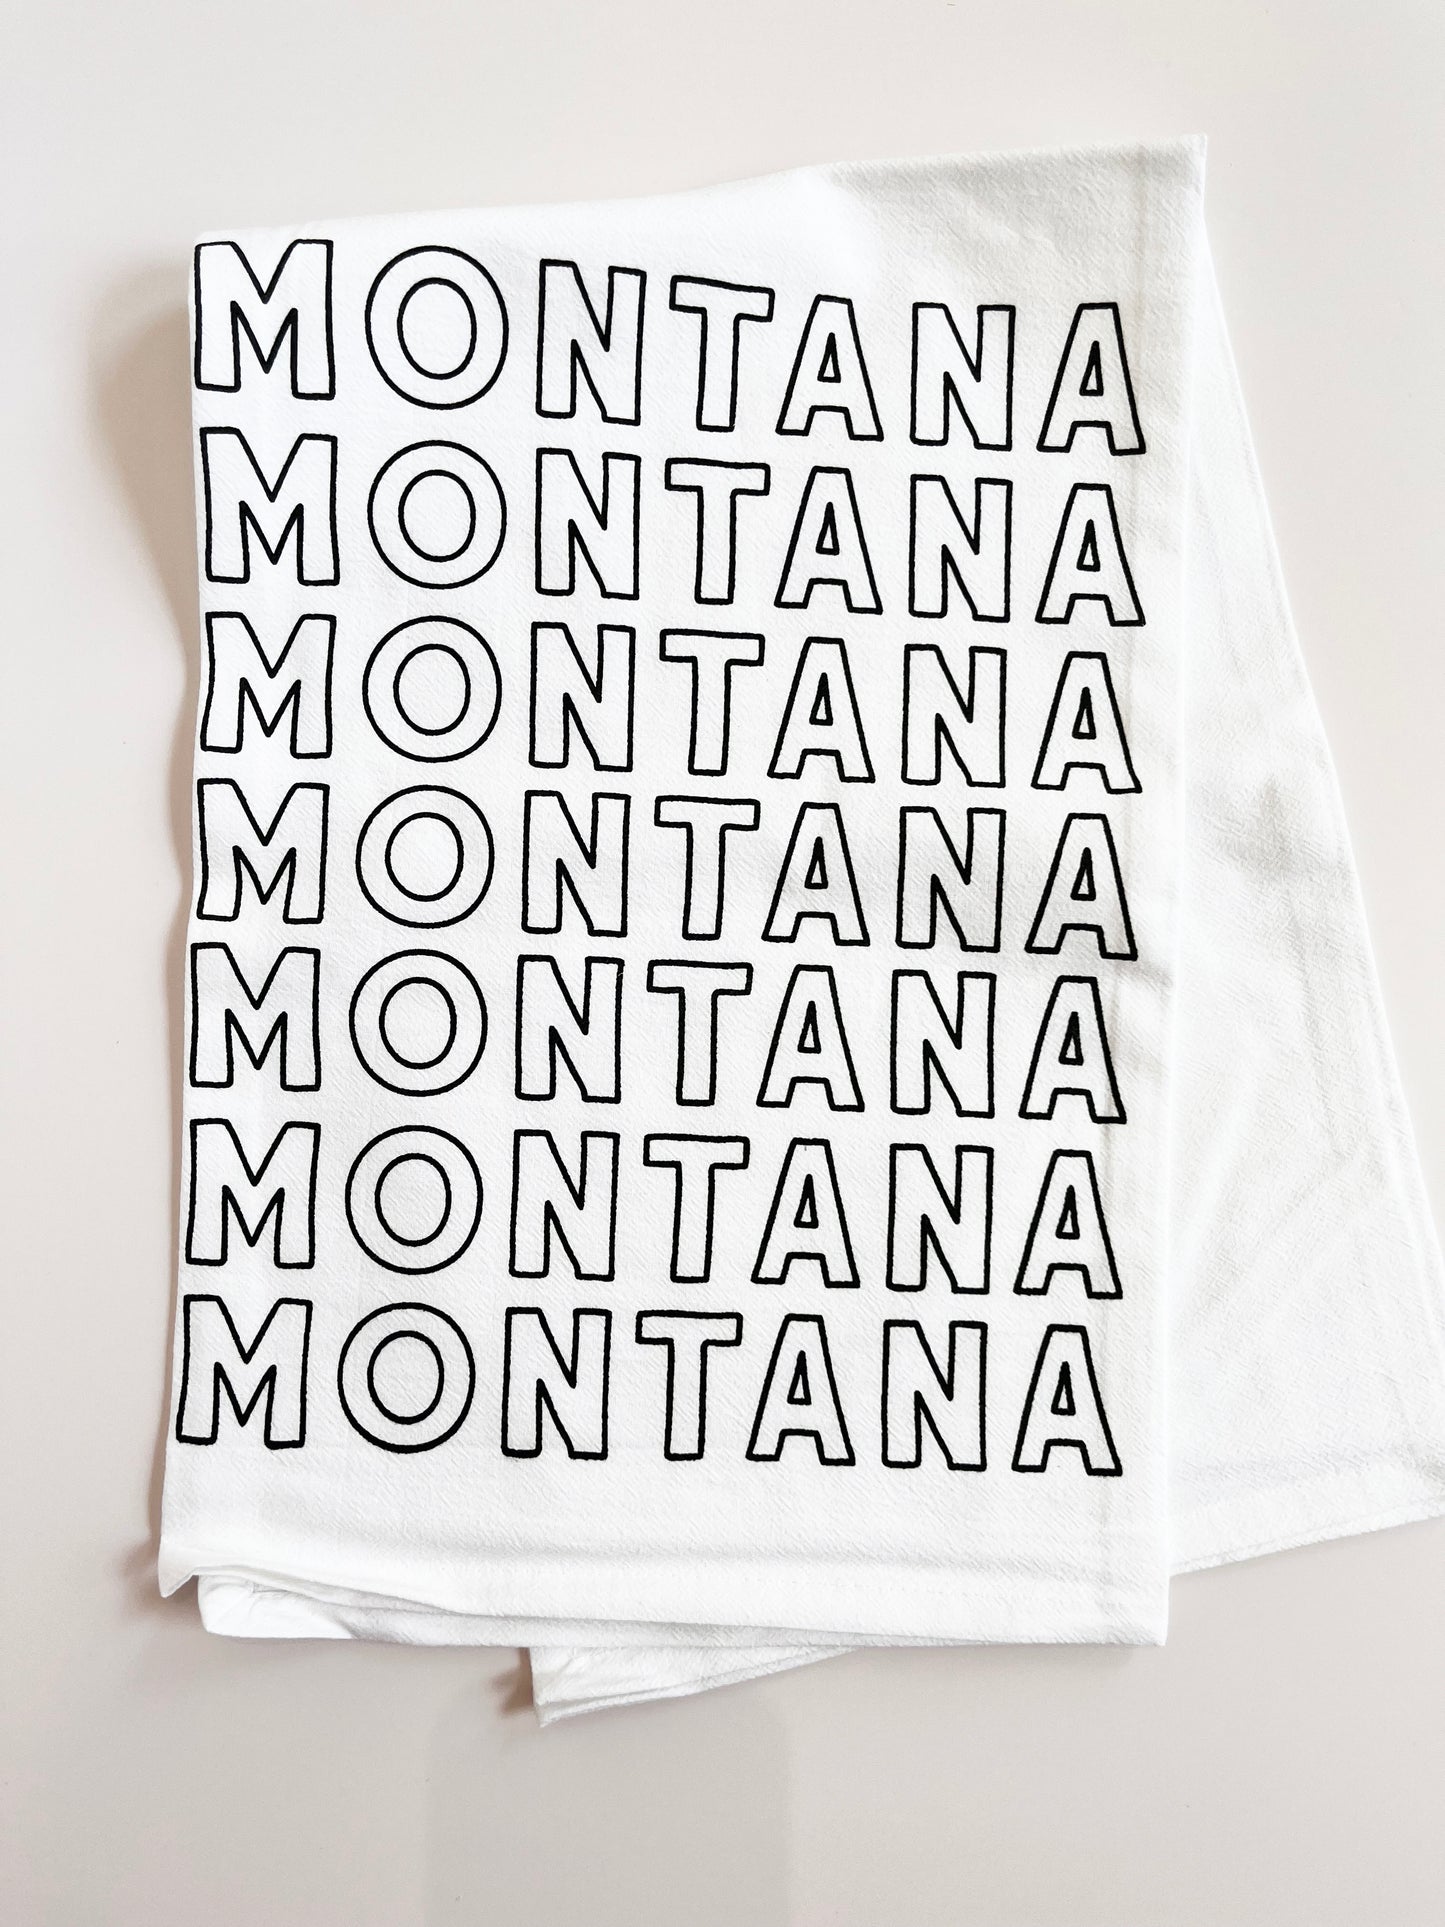 coin laundry montana souvenir tea towel kitchen towel dish towel decorative towel screen printed fun montana theme gifts montana home decor 